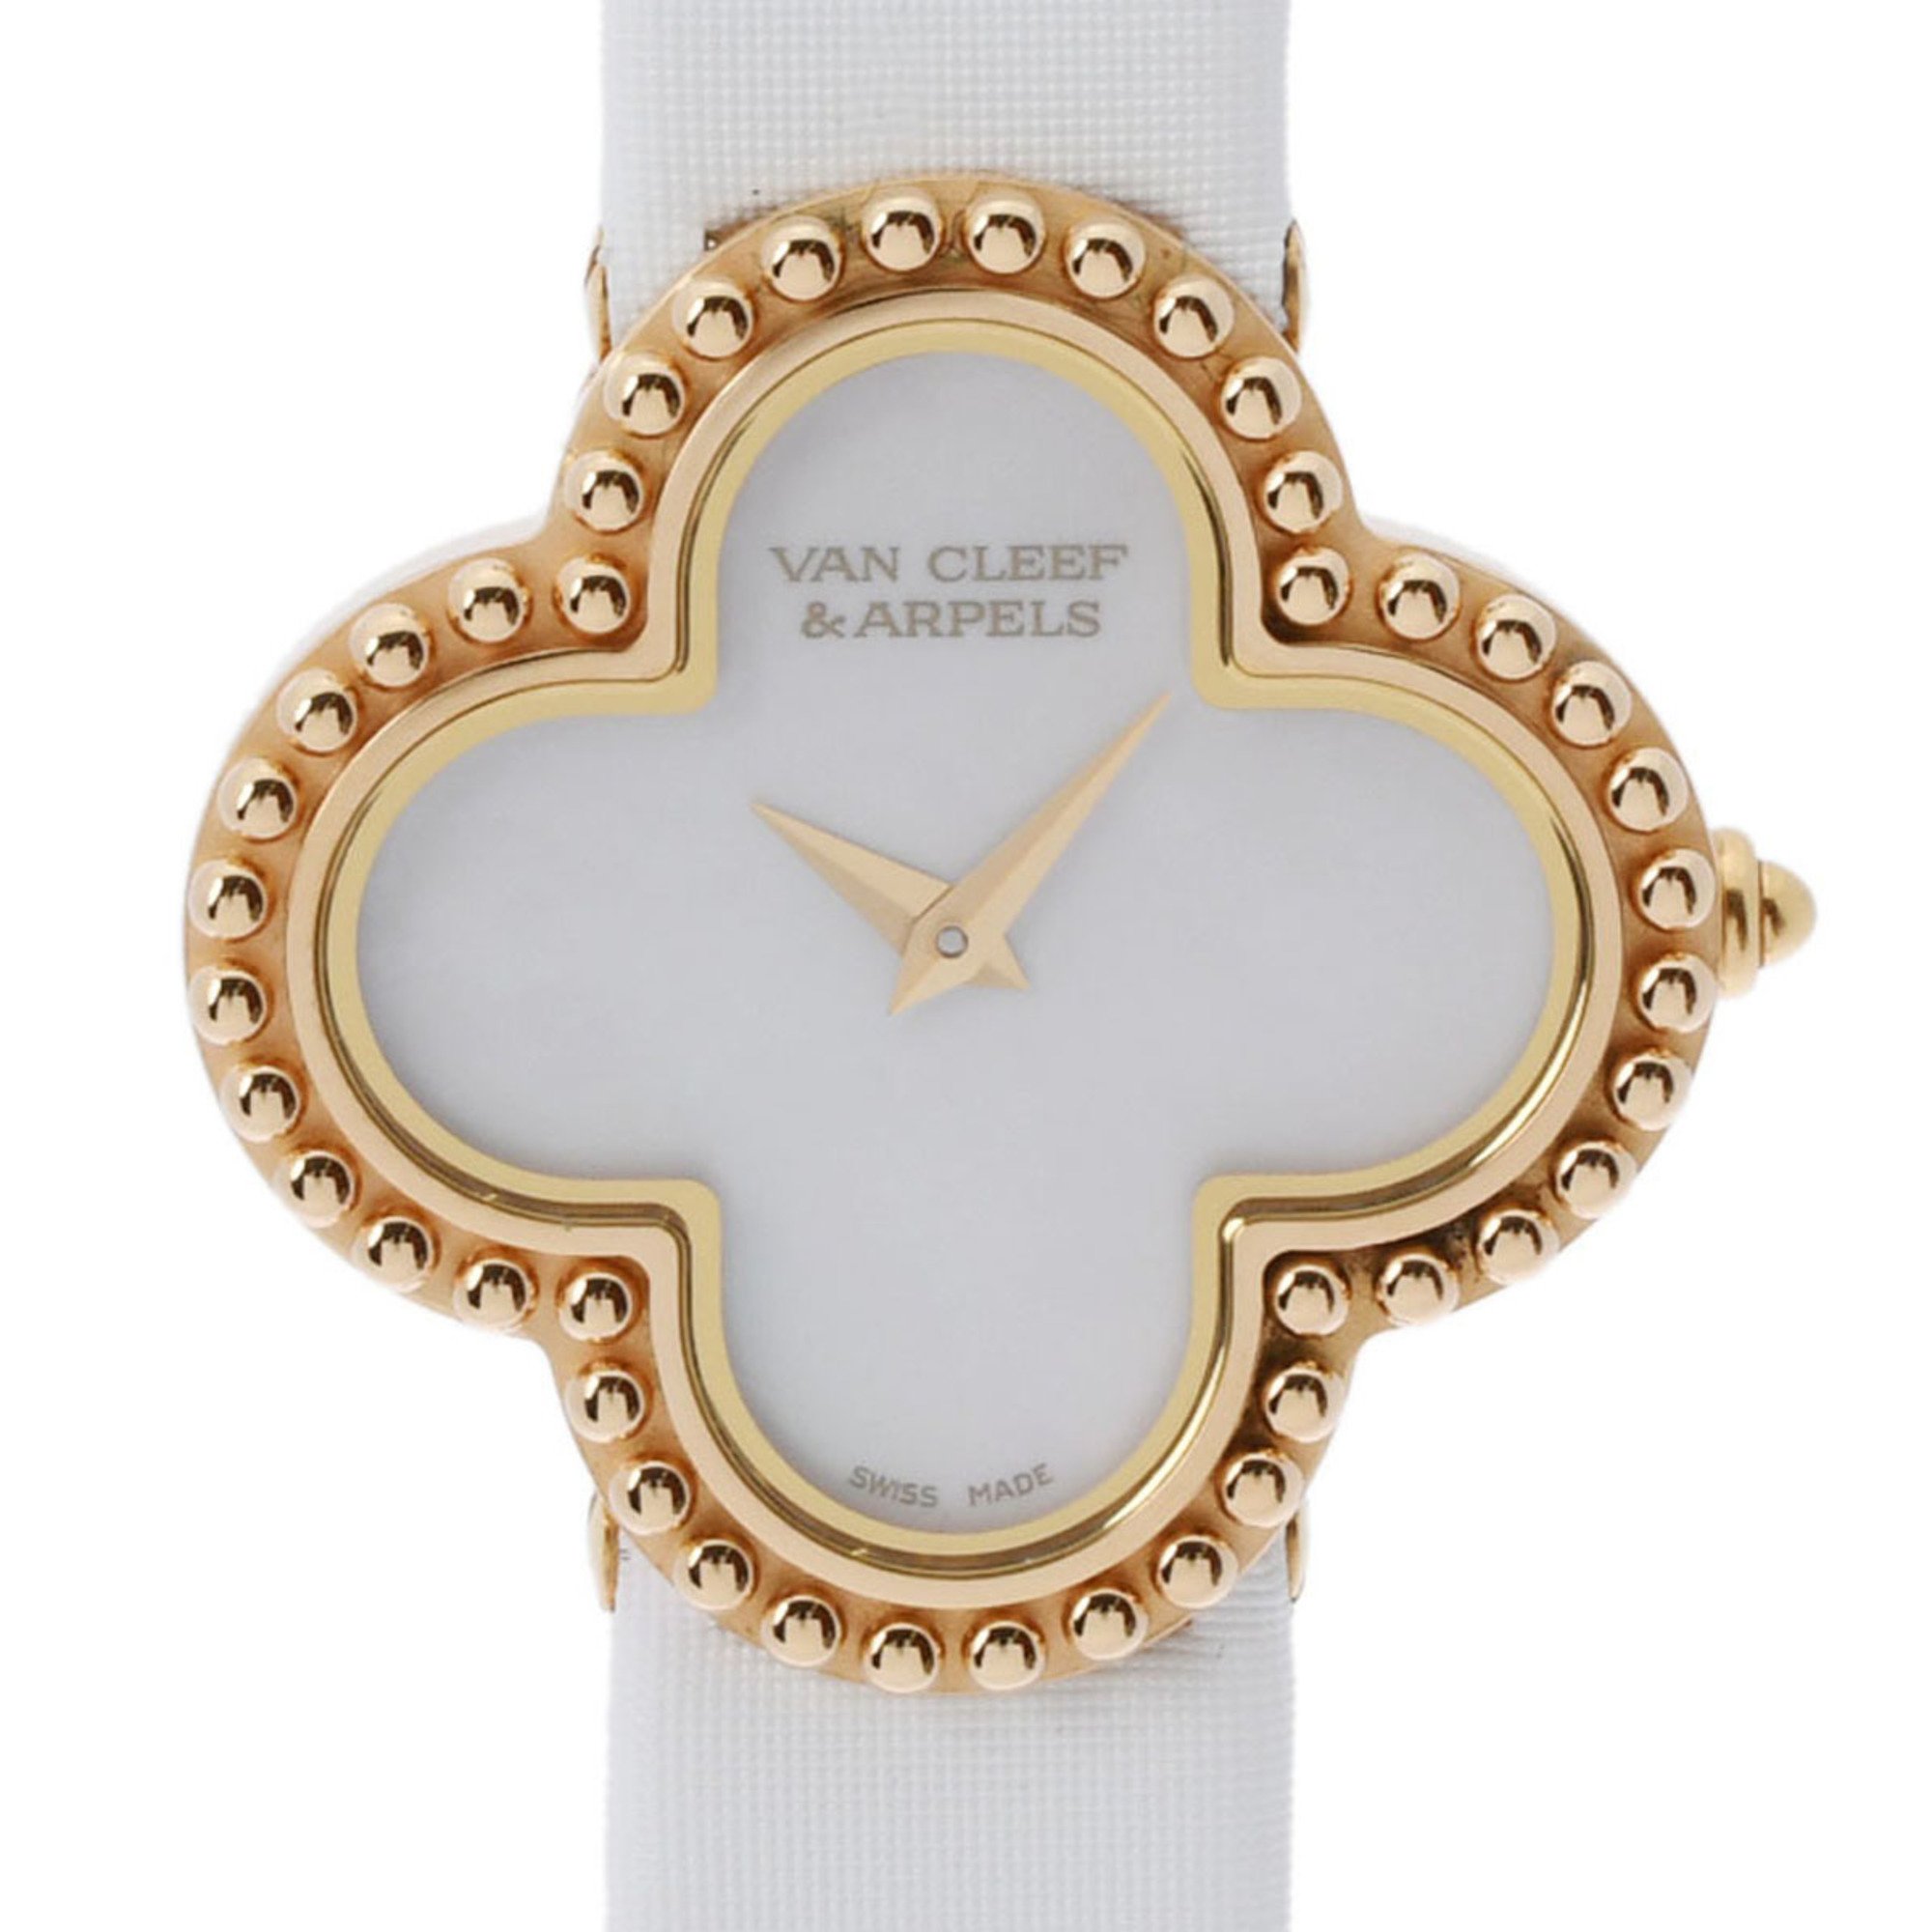 VAN CLEEF & ARPELS Van Cleef Arpels Alhambra Women's YG/Leather Watch Quartz Shell Dial